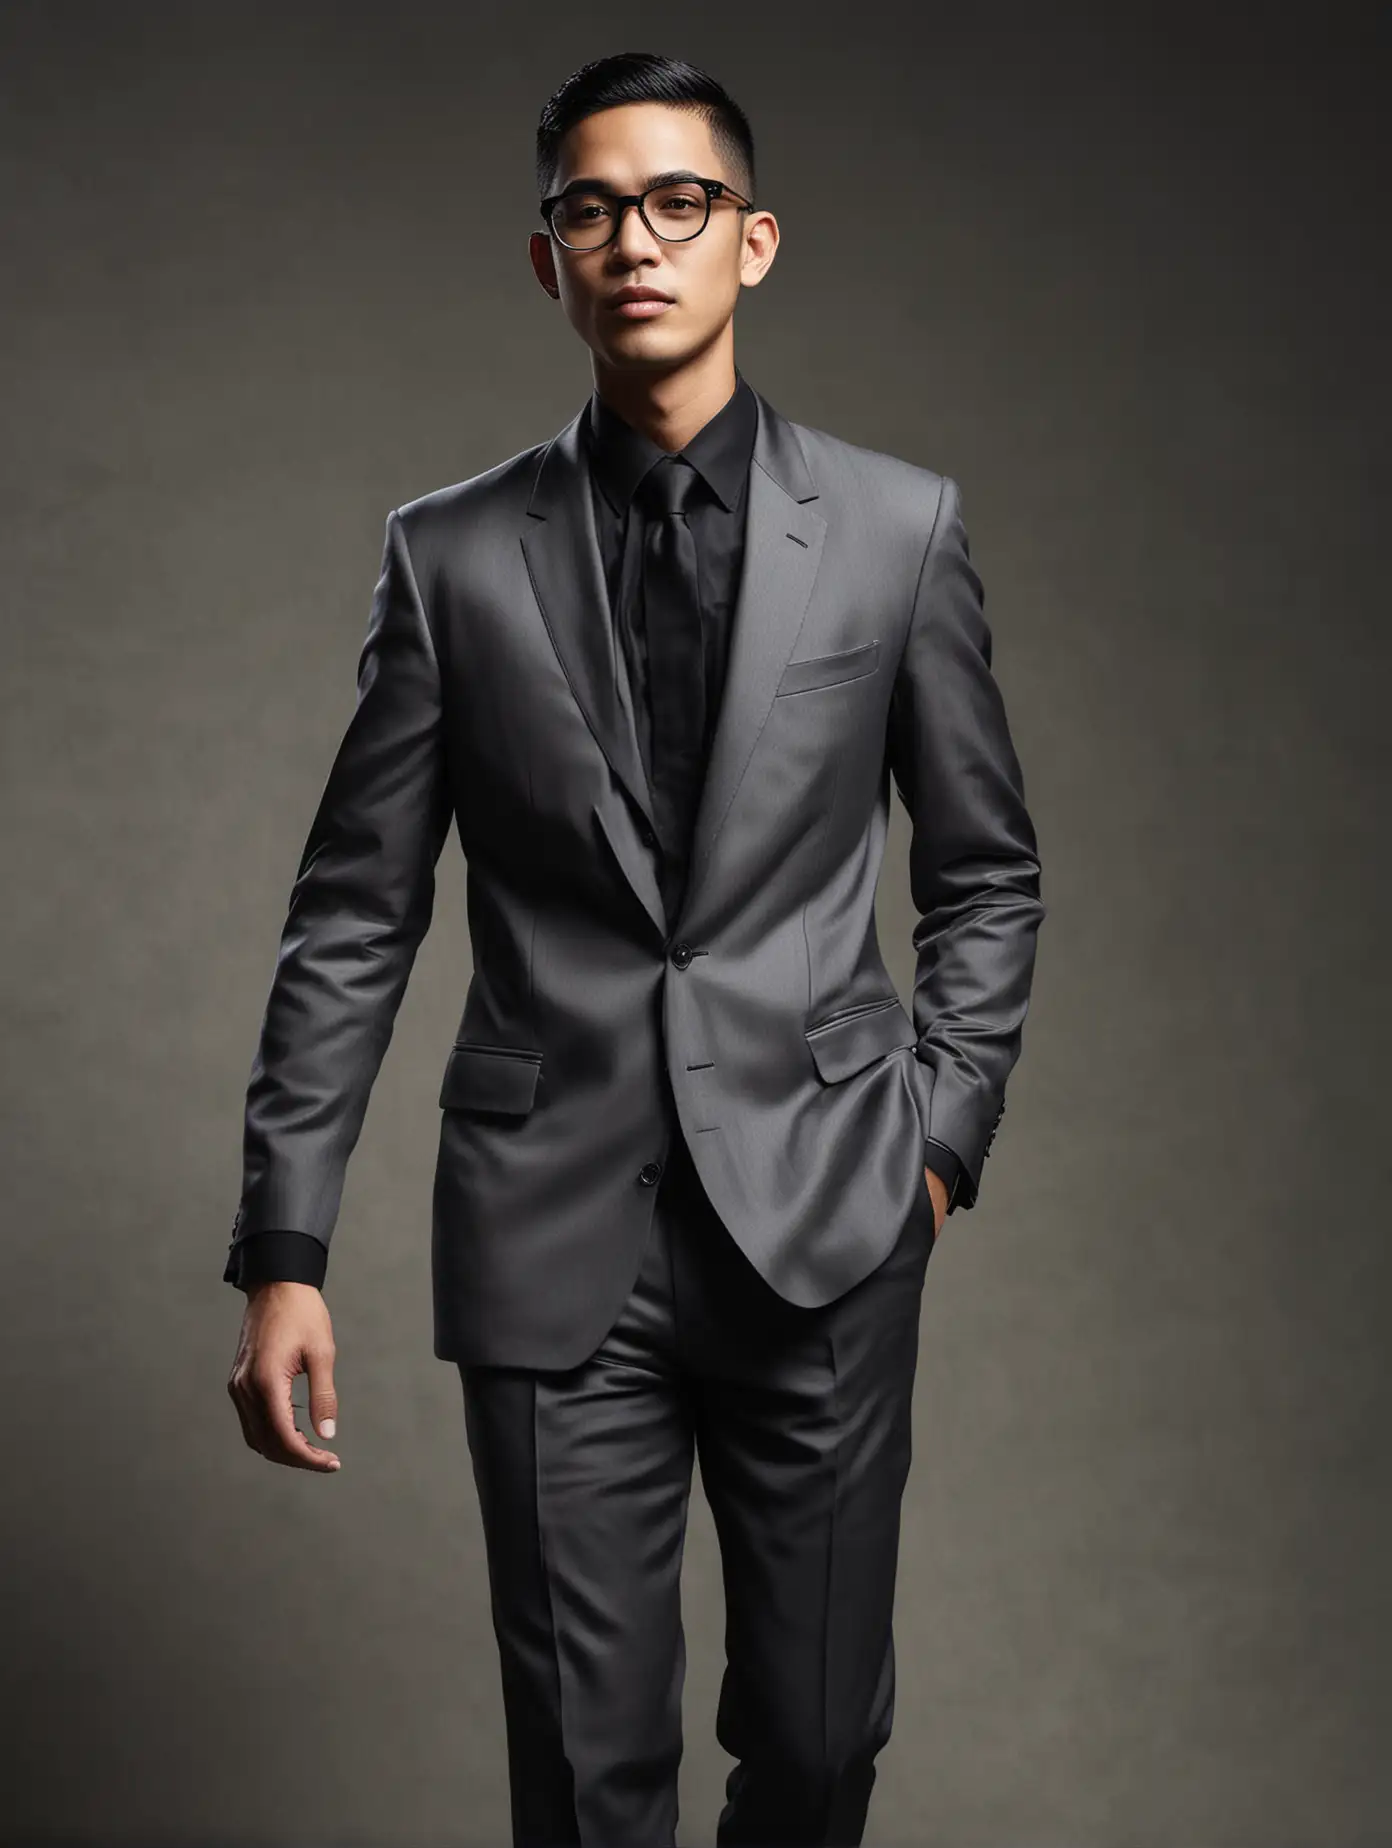 Confident-Southeast-Asian-Man-in-Formal-Portrait